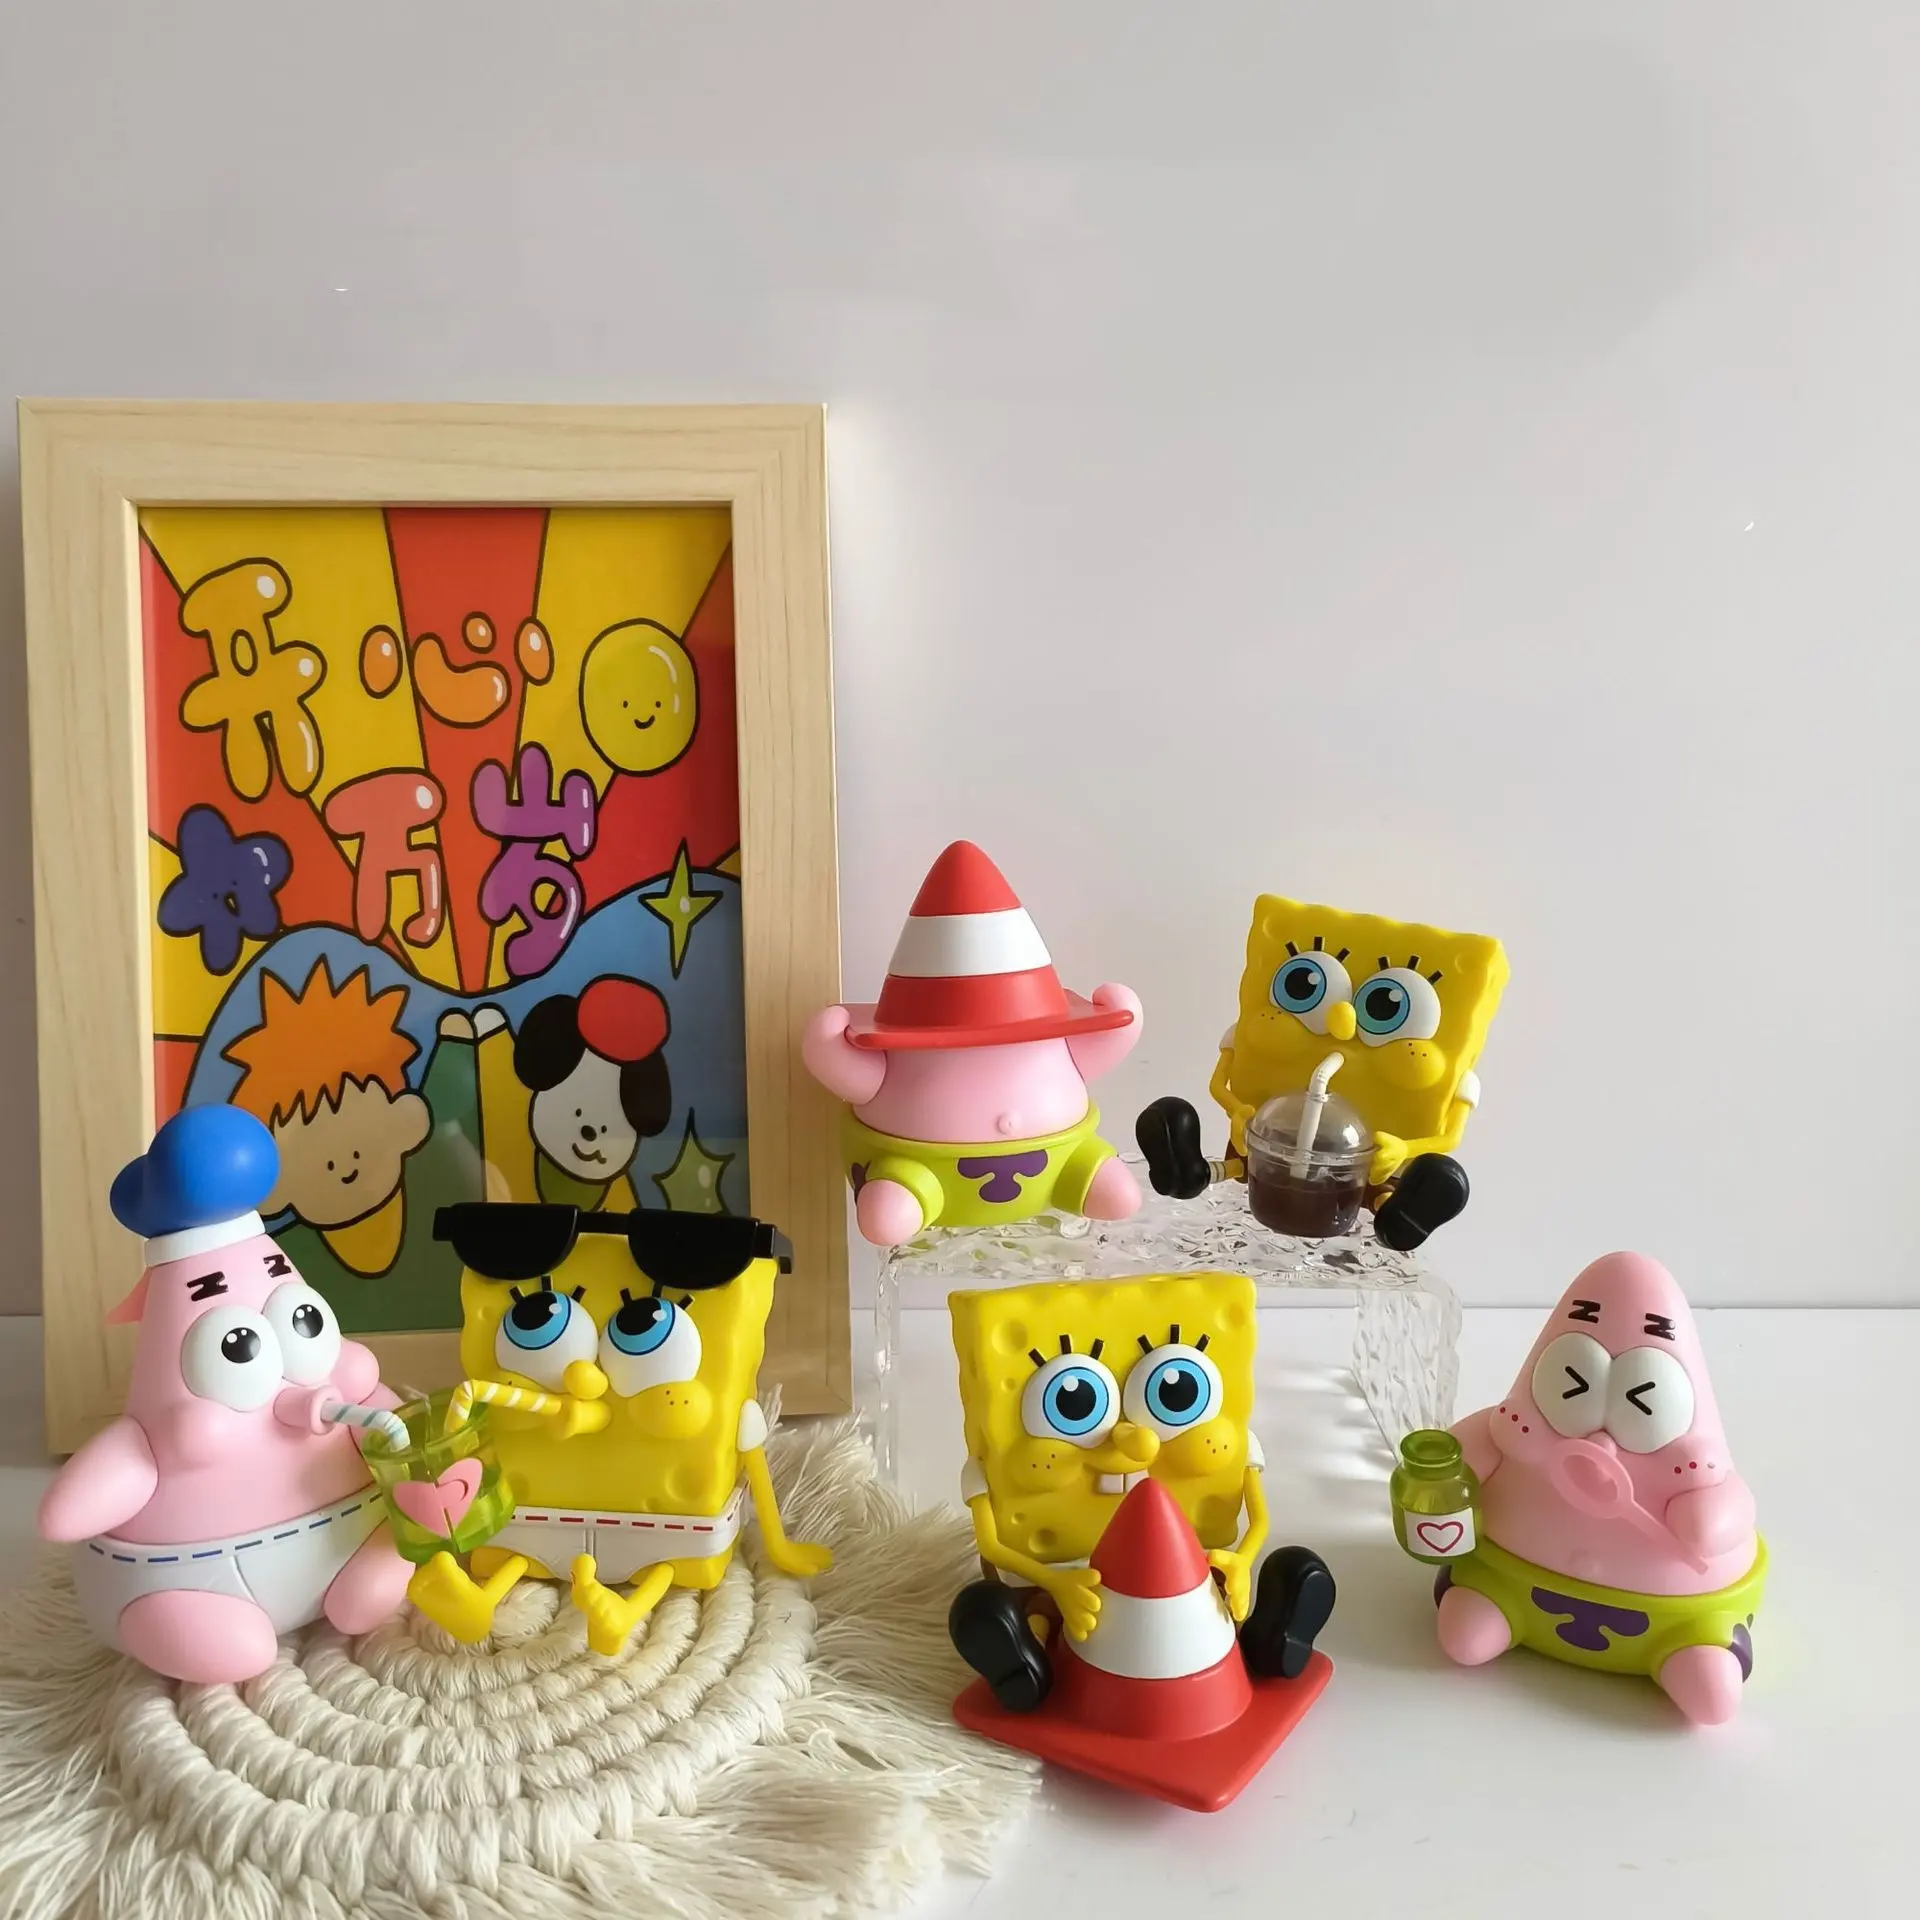 AL Spongebobb Good Friend Series Juego de moda PVC juguete Lindo Periférico Muñecas Twisted Egg Juguetes Coche Decorativo